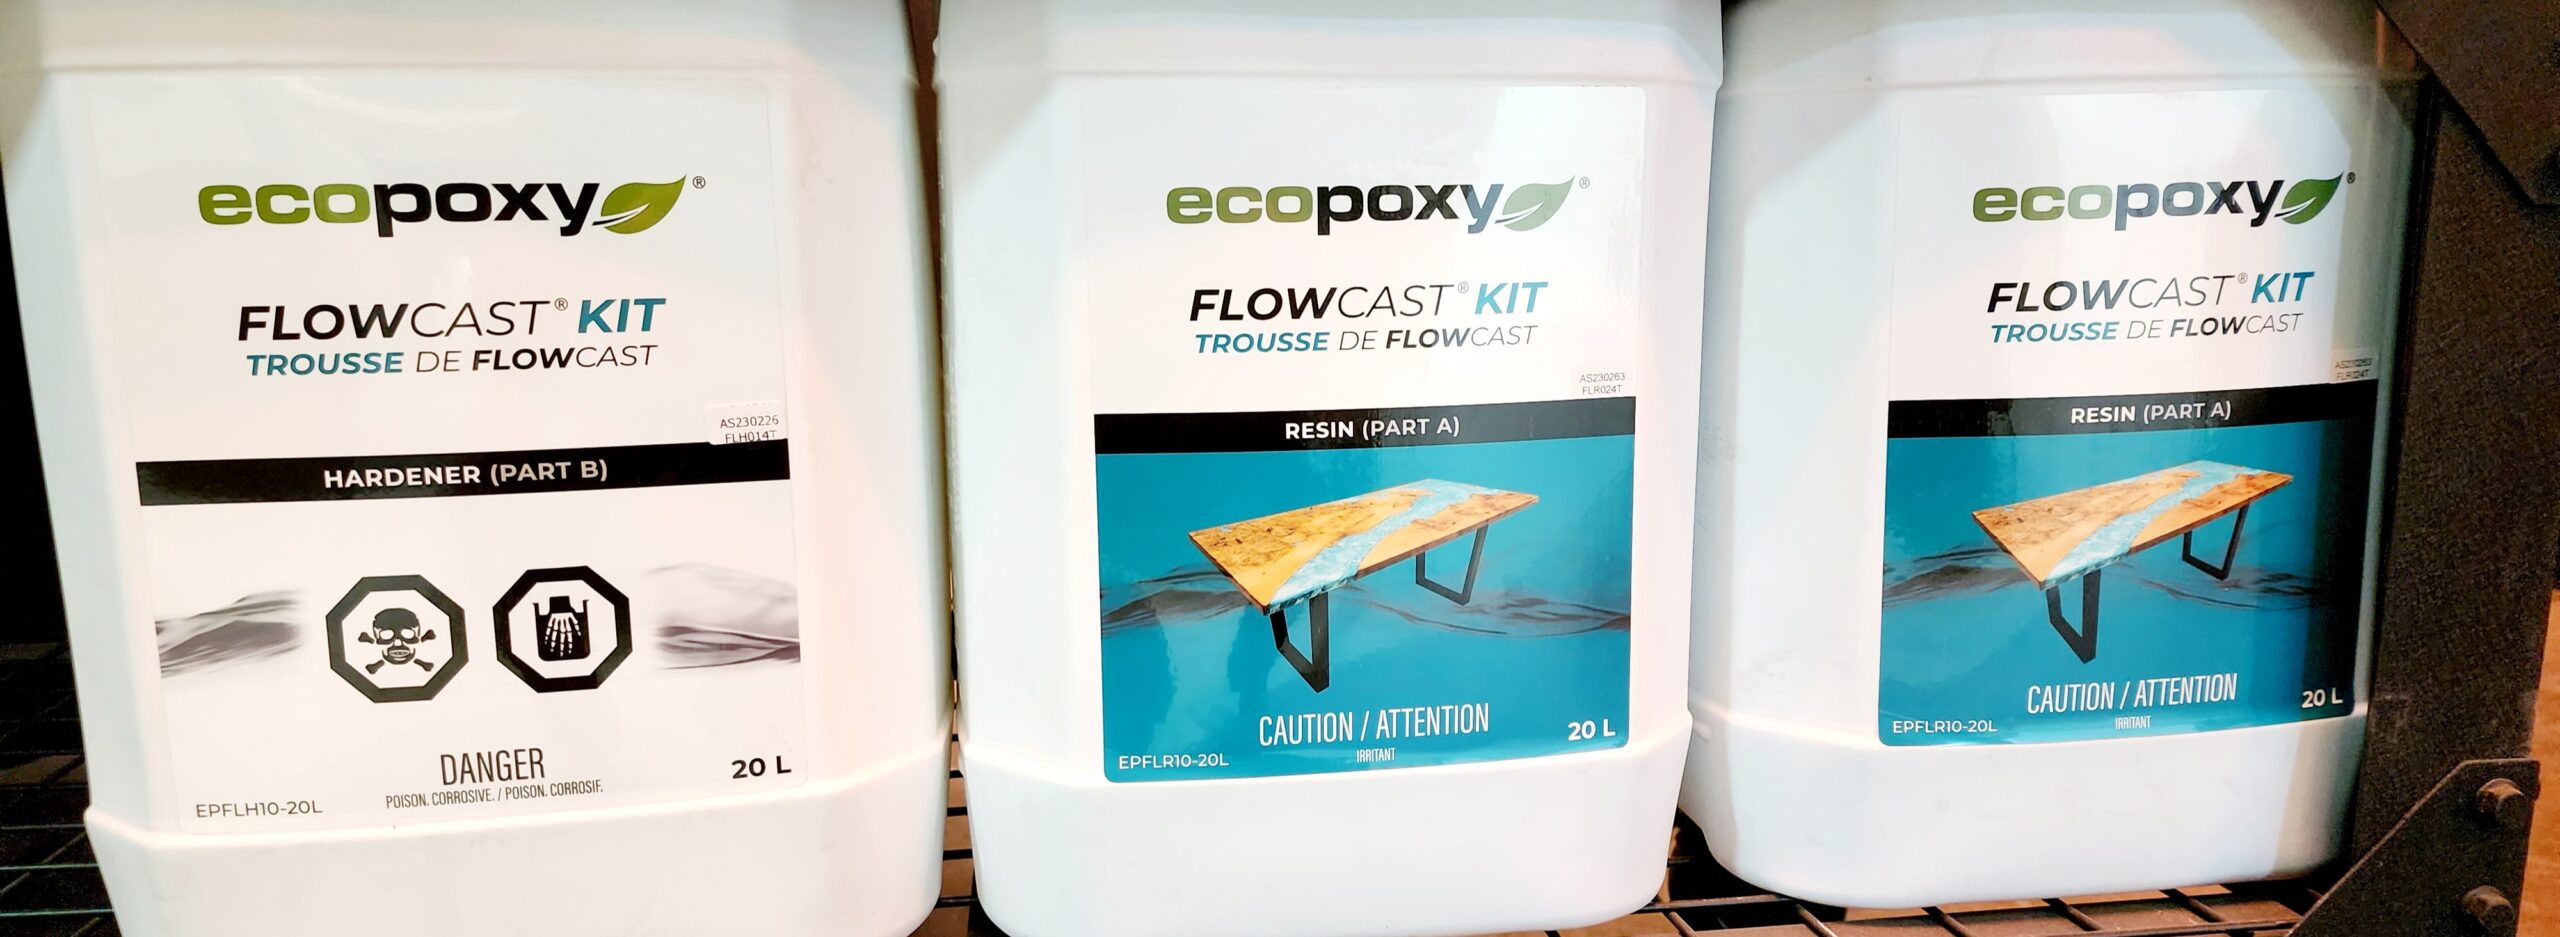 Ecopoxy Flowcast (3L) C/W Mixing KIT